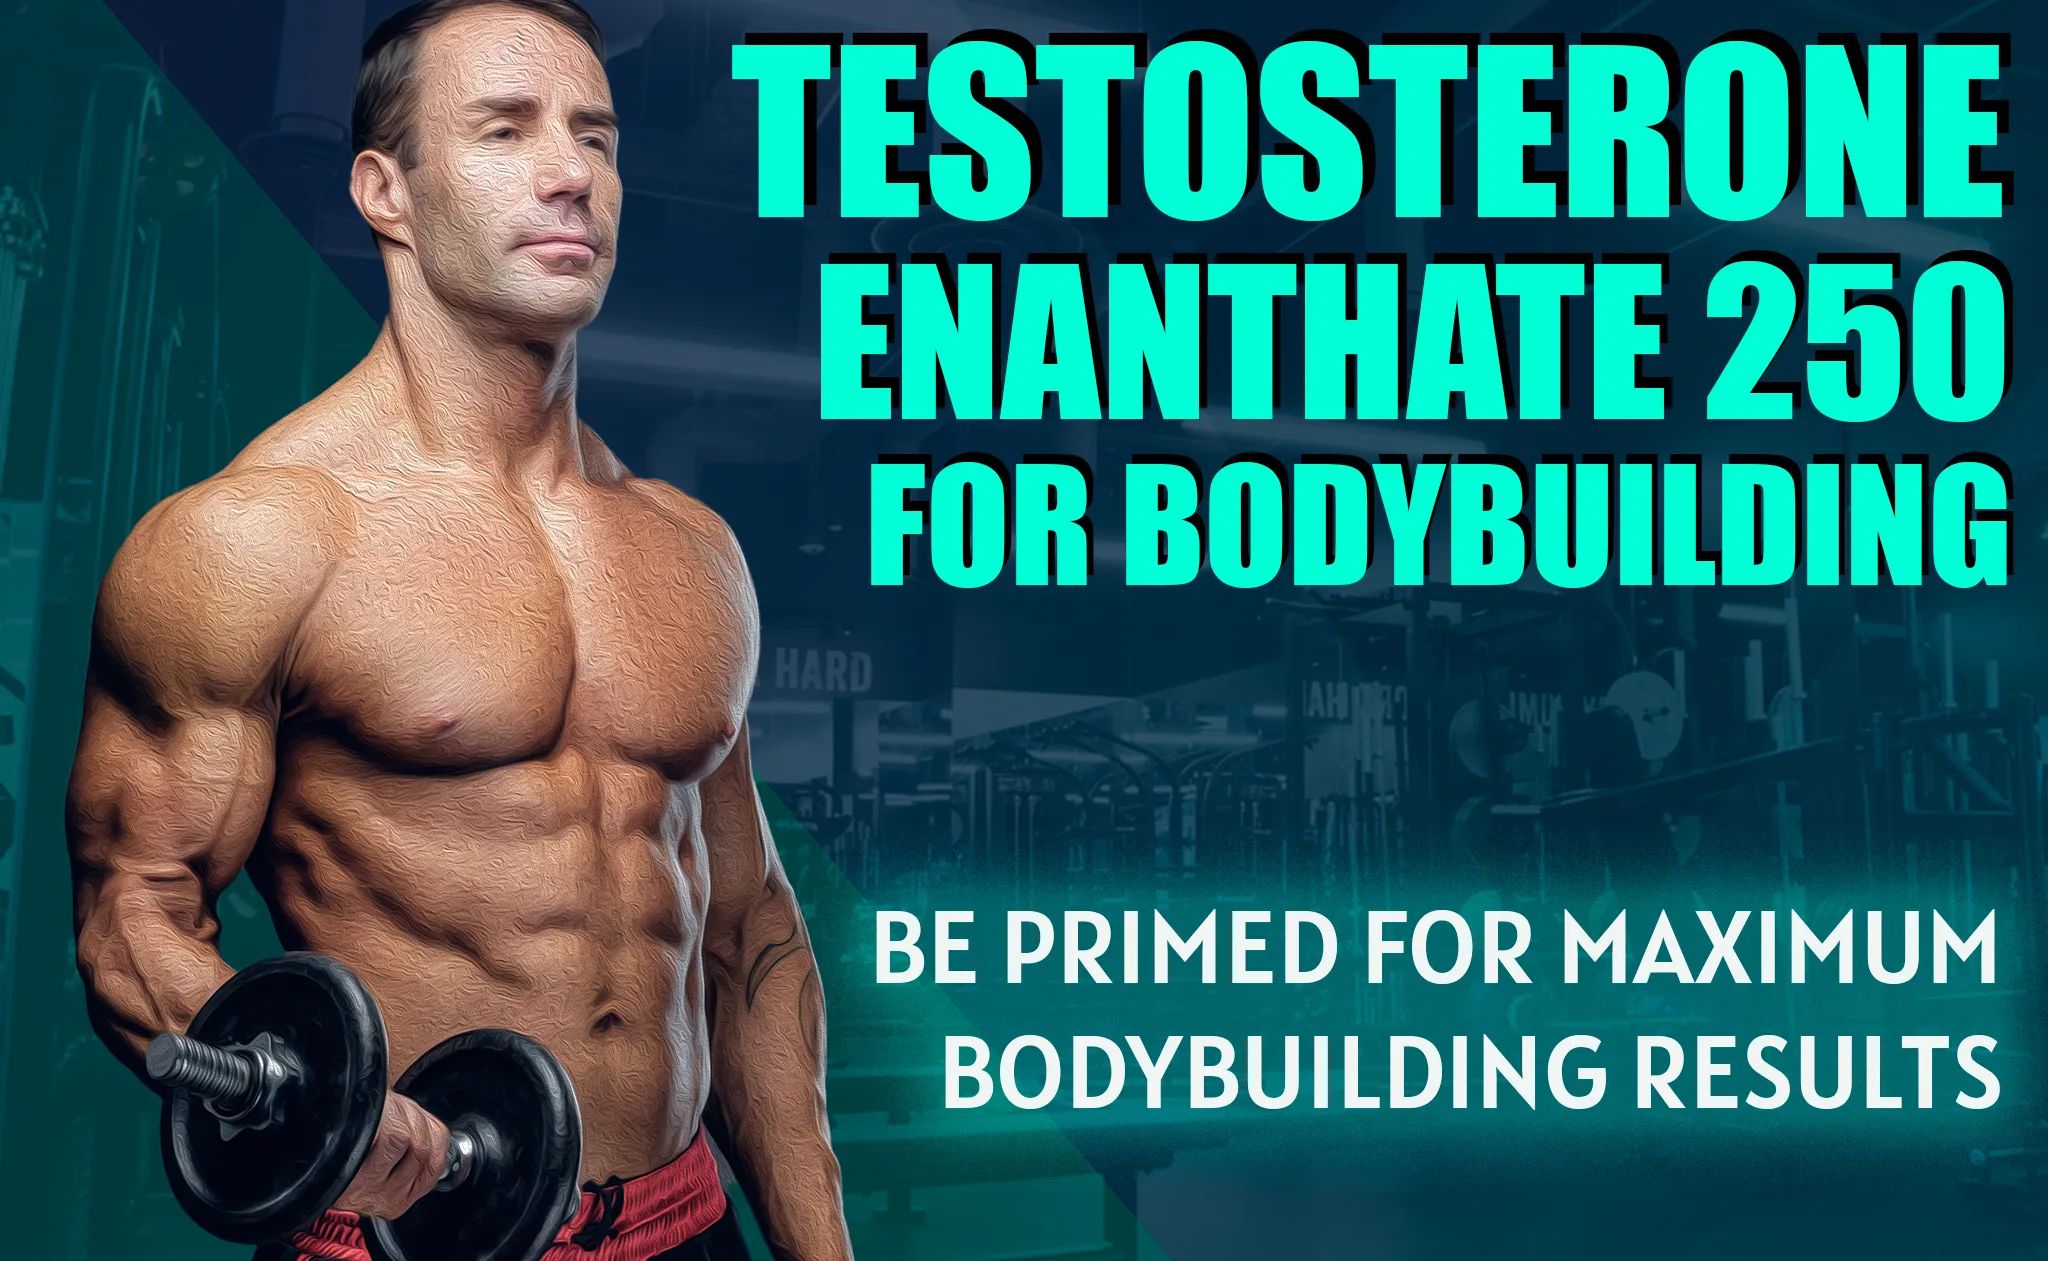 Testosterone Enanthate 250 benefits